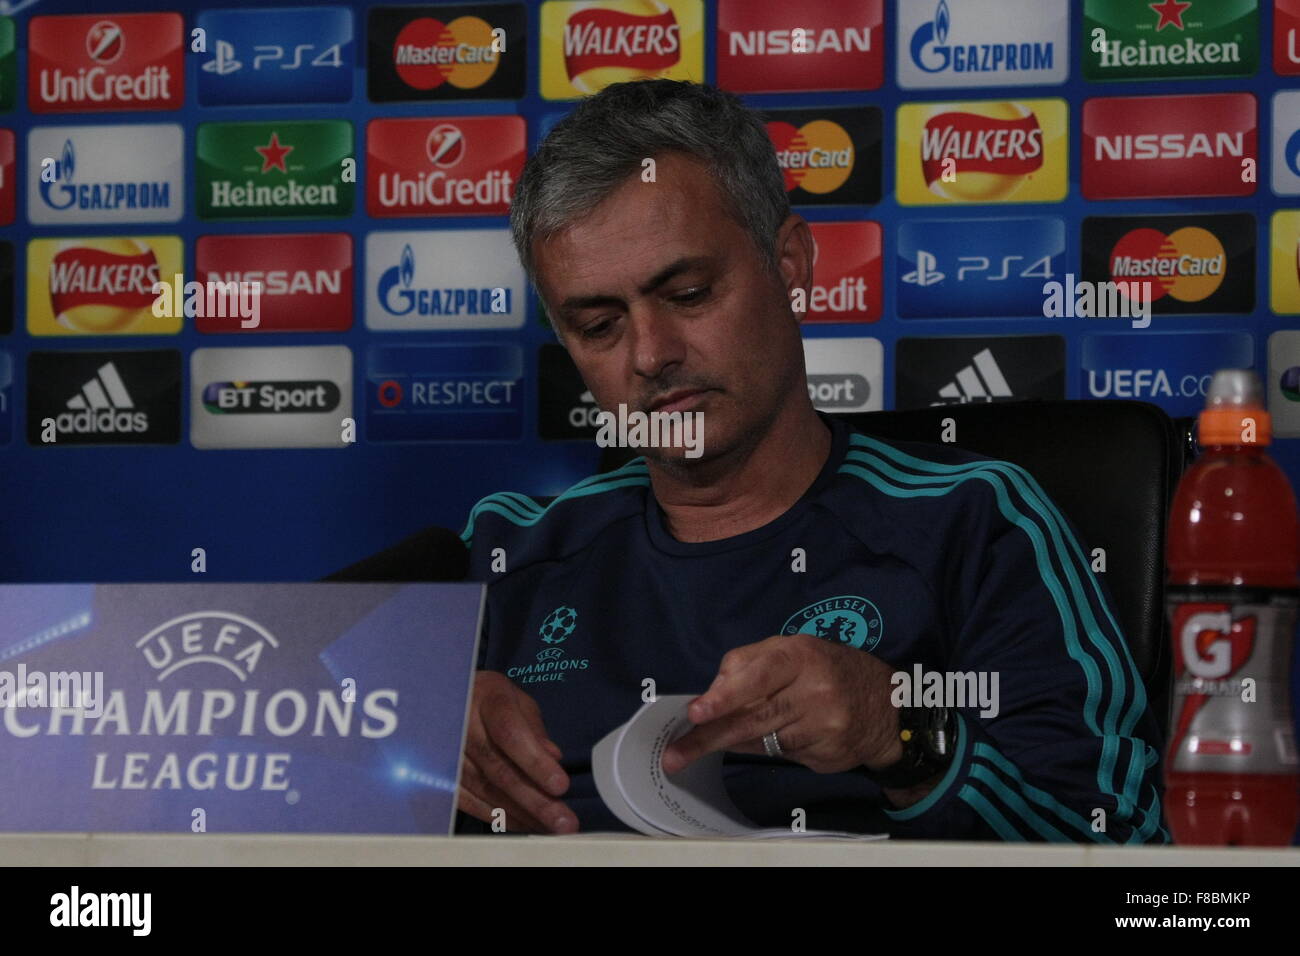 Snap shot: Mourinho's Porto win Champions League, UEFA Champions League